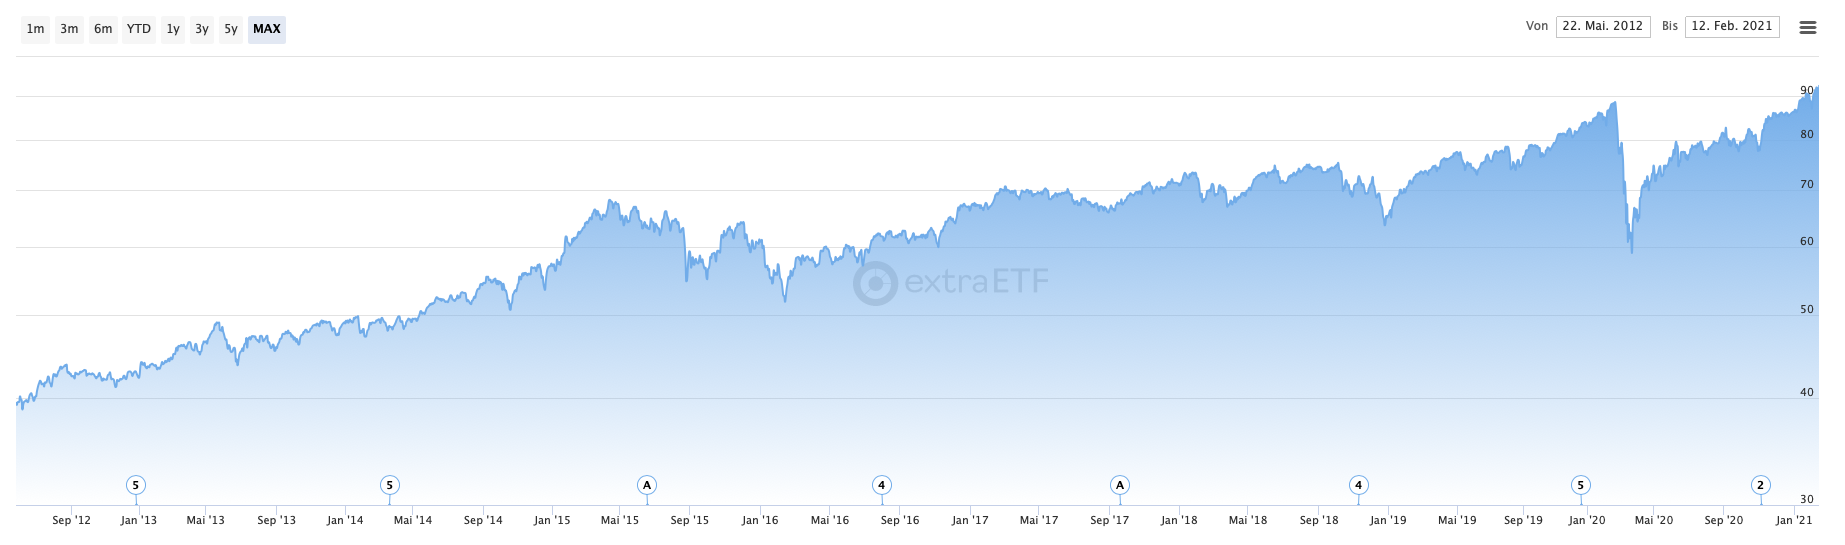 Vanguard FTSE All World ETF Chart über 5 Jahre